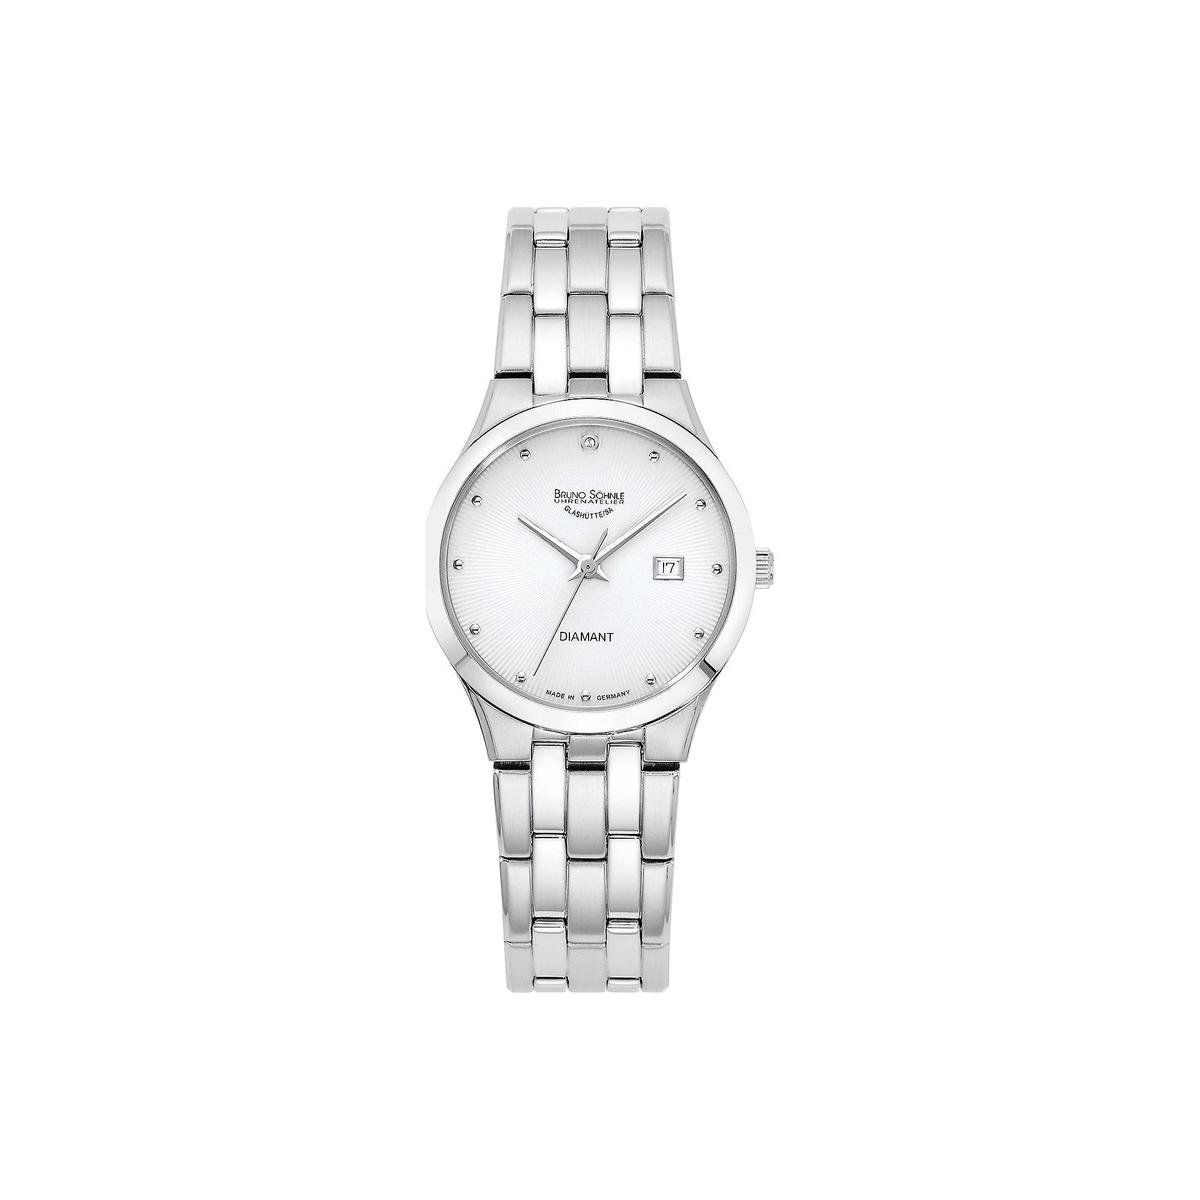 Bruno Soehnle dames horloges quartz analoog One Size 87451909